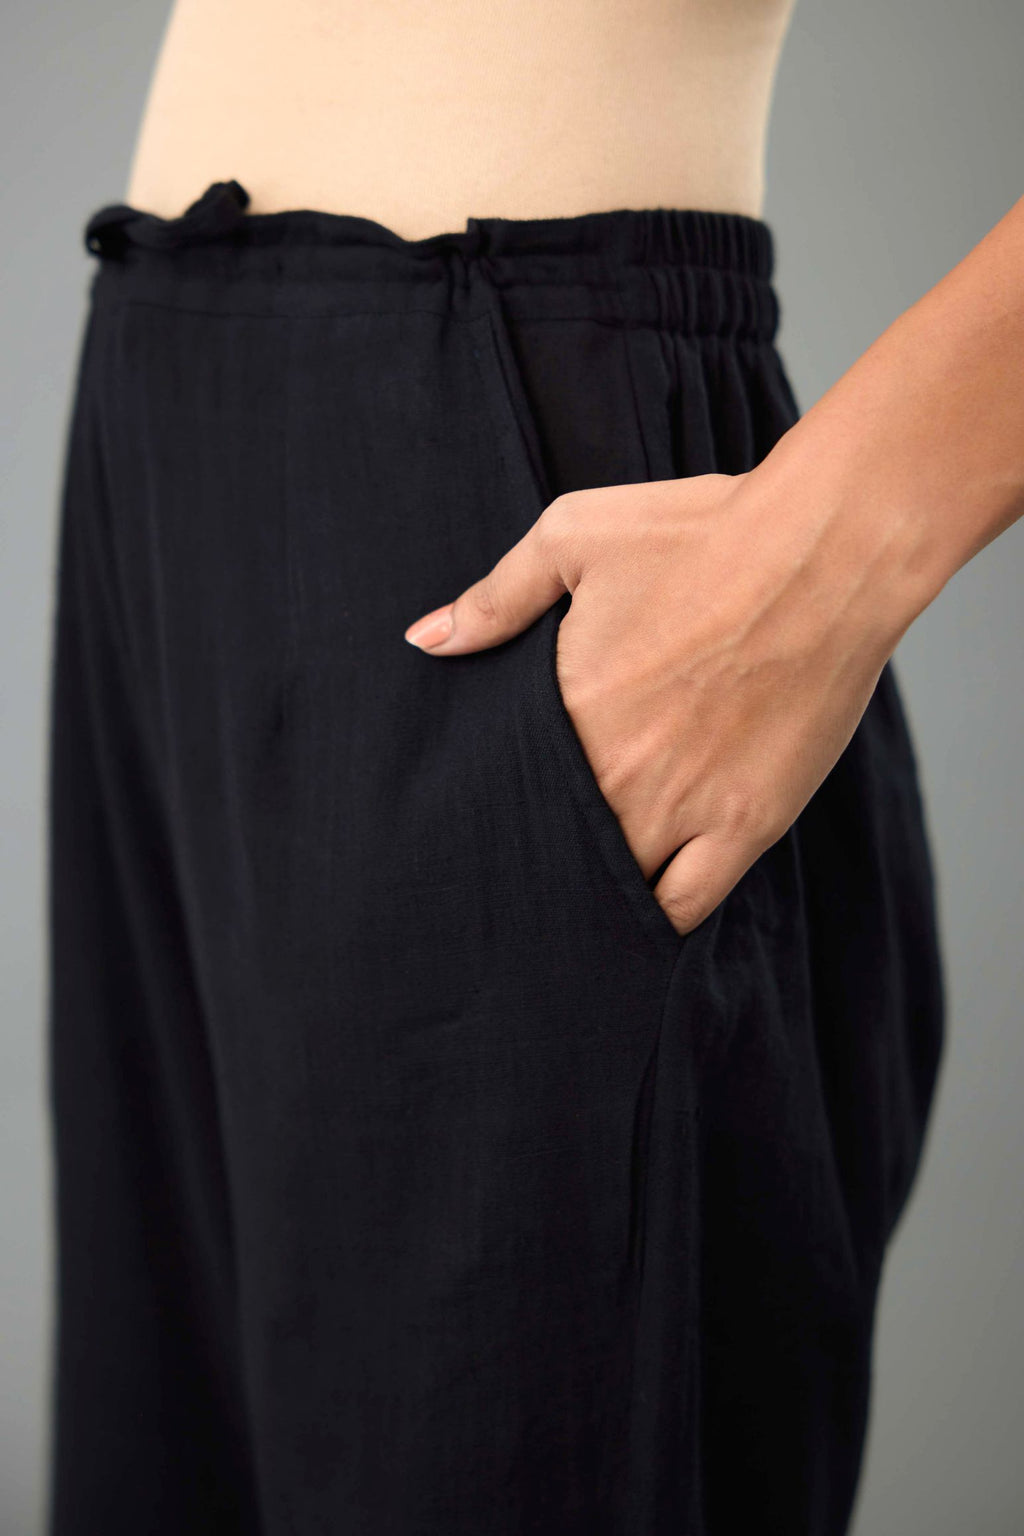 Black handloom cotton straight pants.